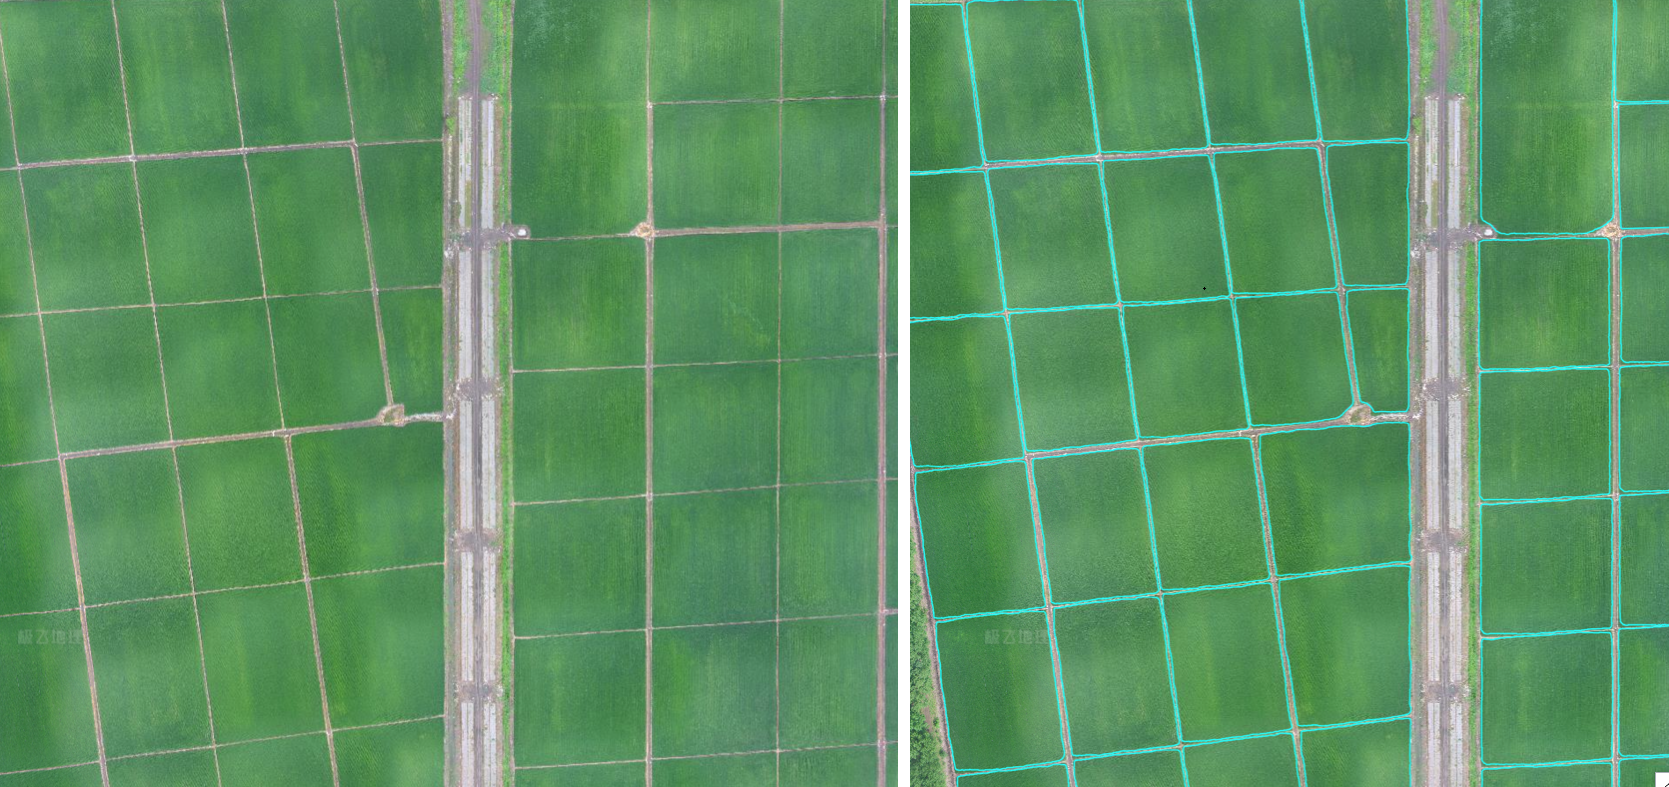 XAI 基于无人机高清图像自动识别农田边界（右）。该高清农田地图可导入植保无人机，指导无人机精准飞行并完成全自主作业。 